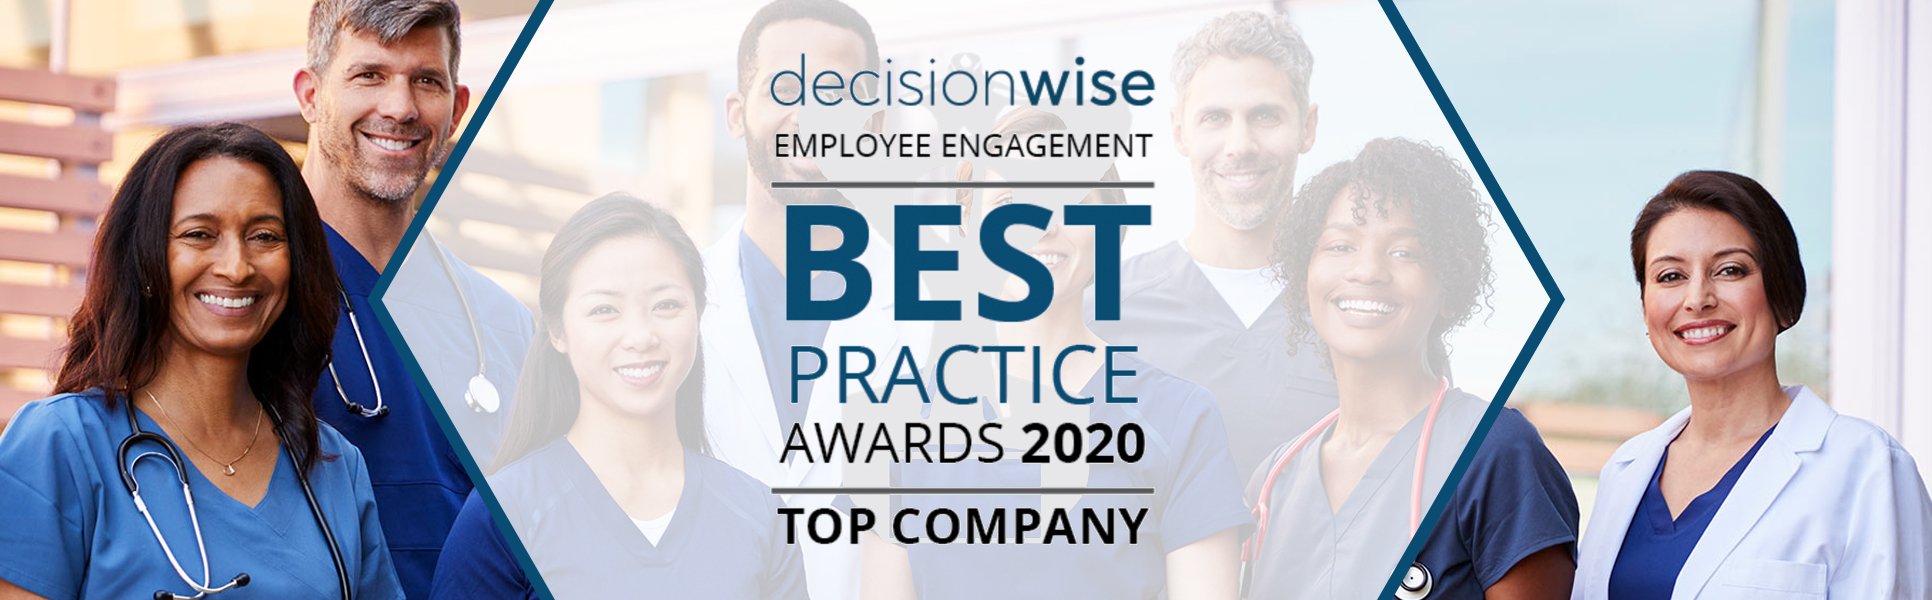 DecisionWise Employee Engagement Best Practice Award 2020 | DOHC